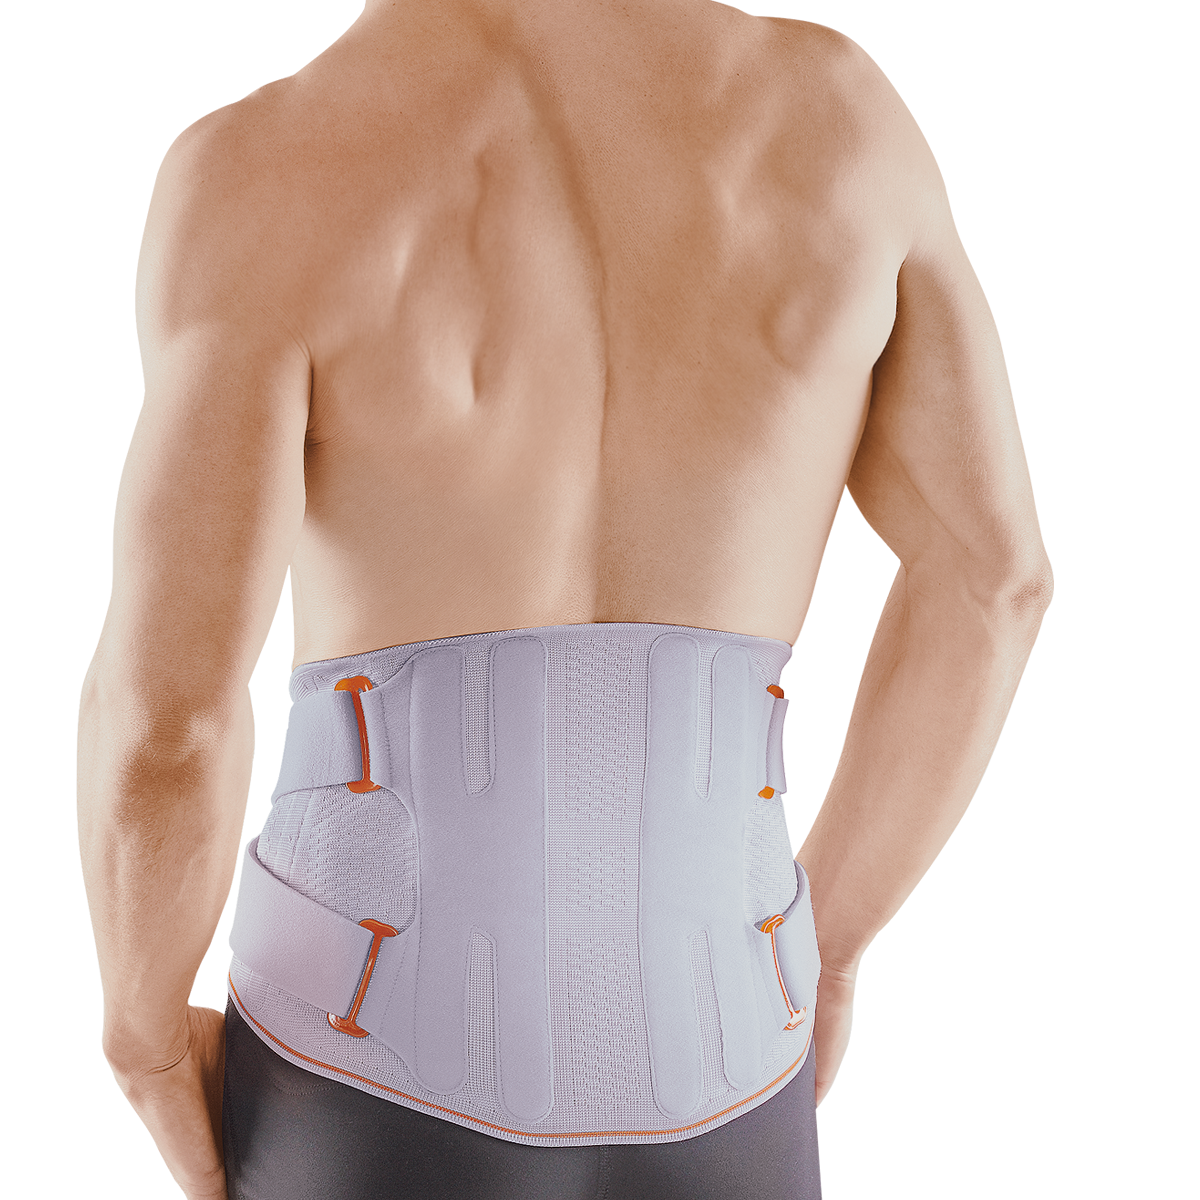 Back Brace for Lower Back Pain Relief Lumbar Support Waist Brace